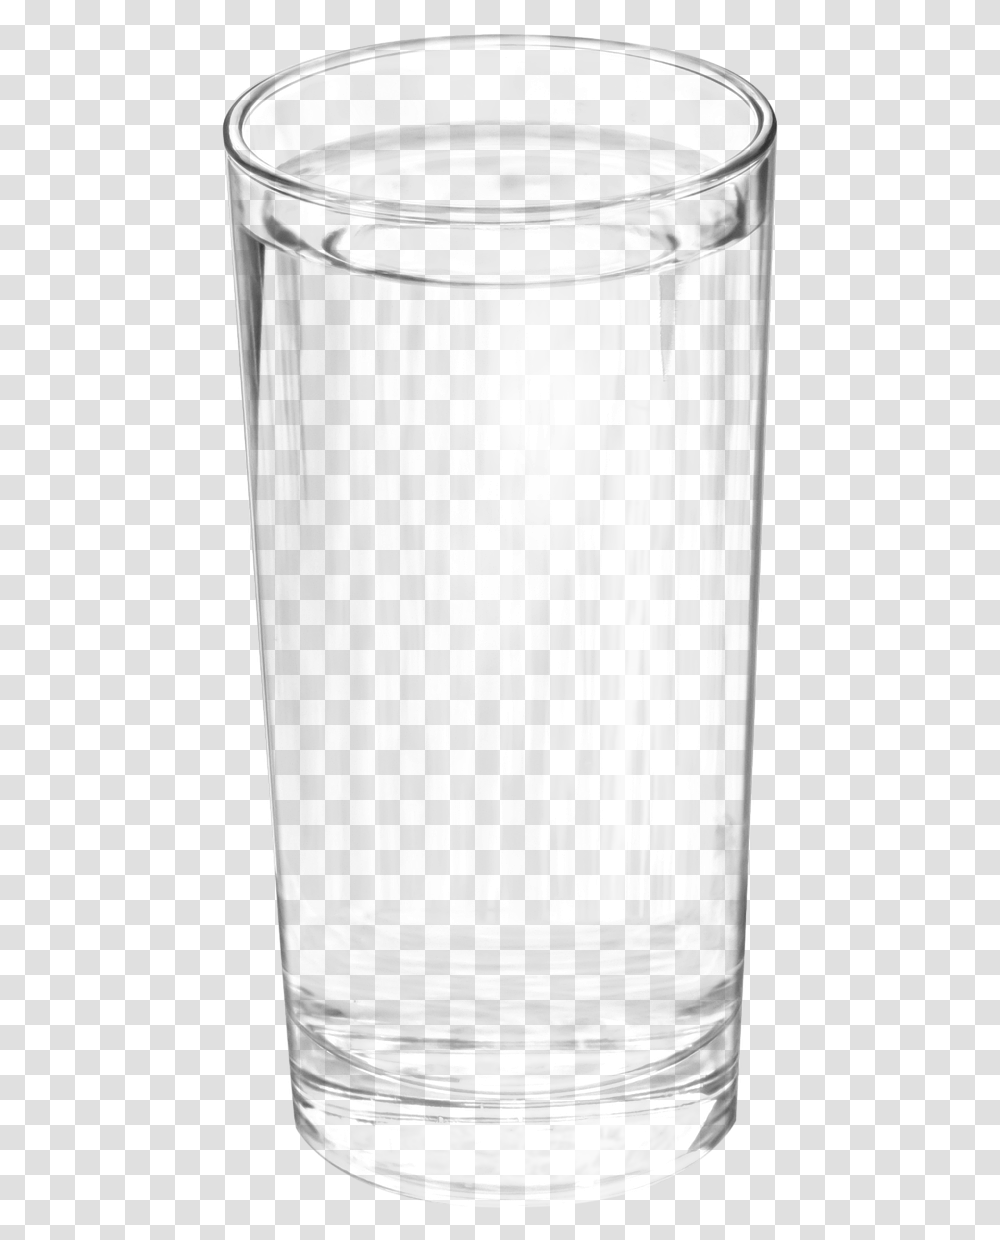 Glass Water Glass Vidro Copo D Gua, Shower Curtain, Milk, Beverage, Drink Transparent Png